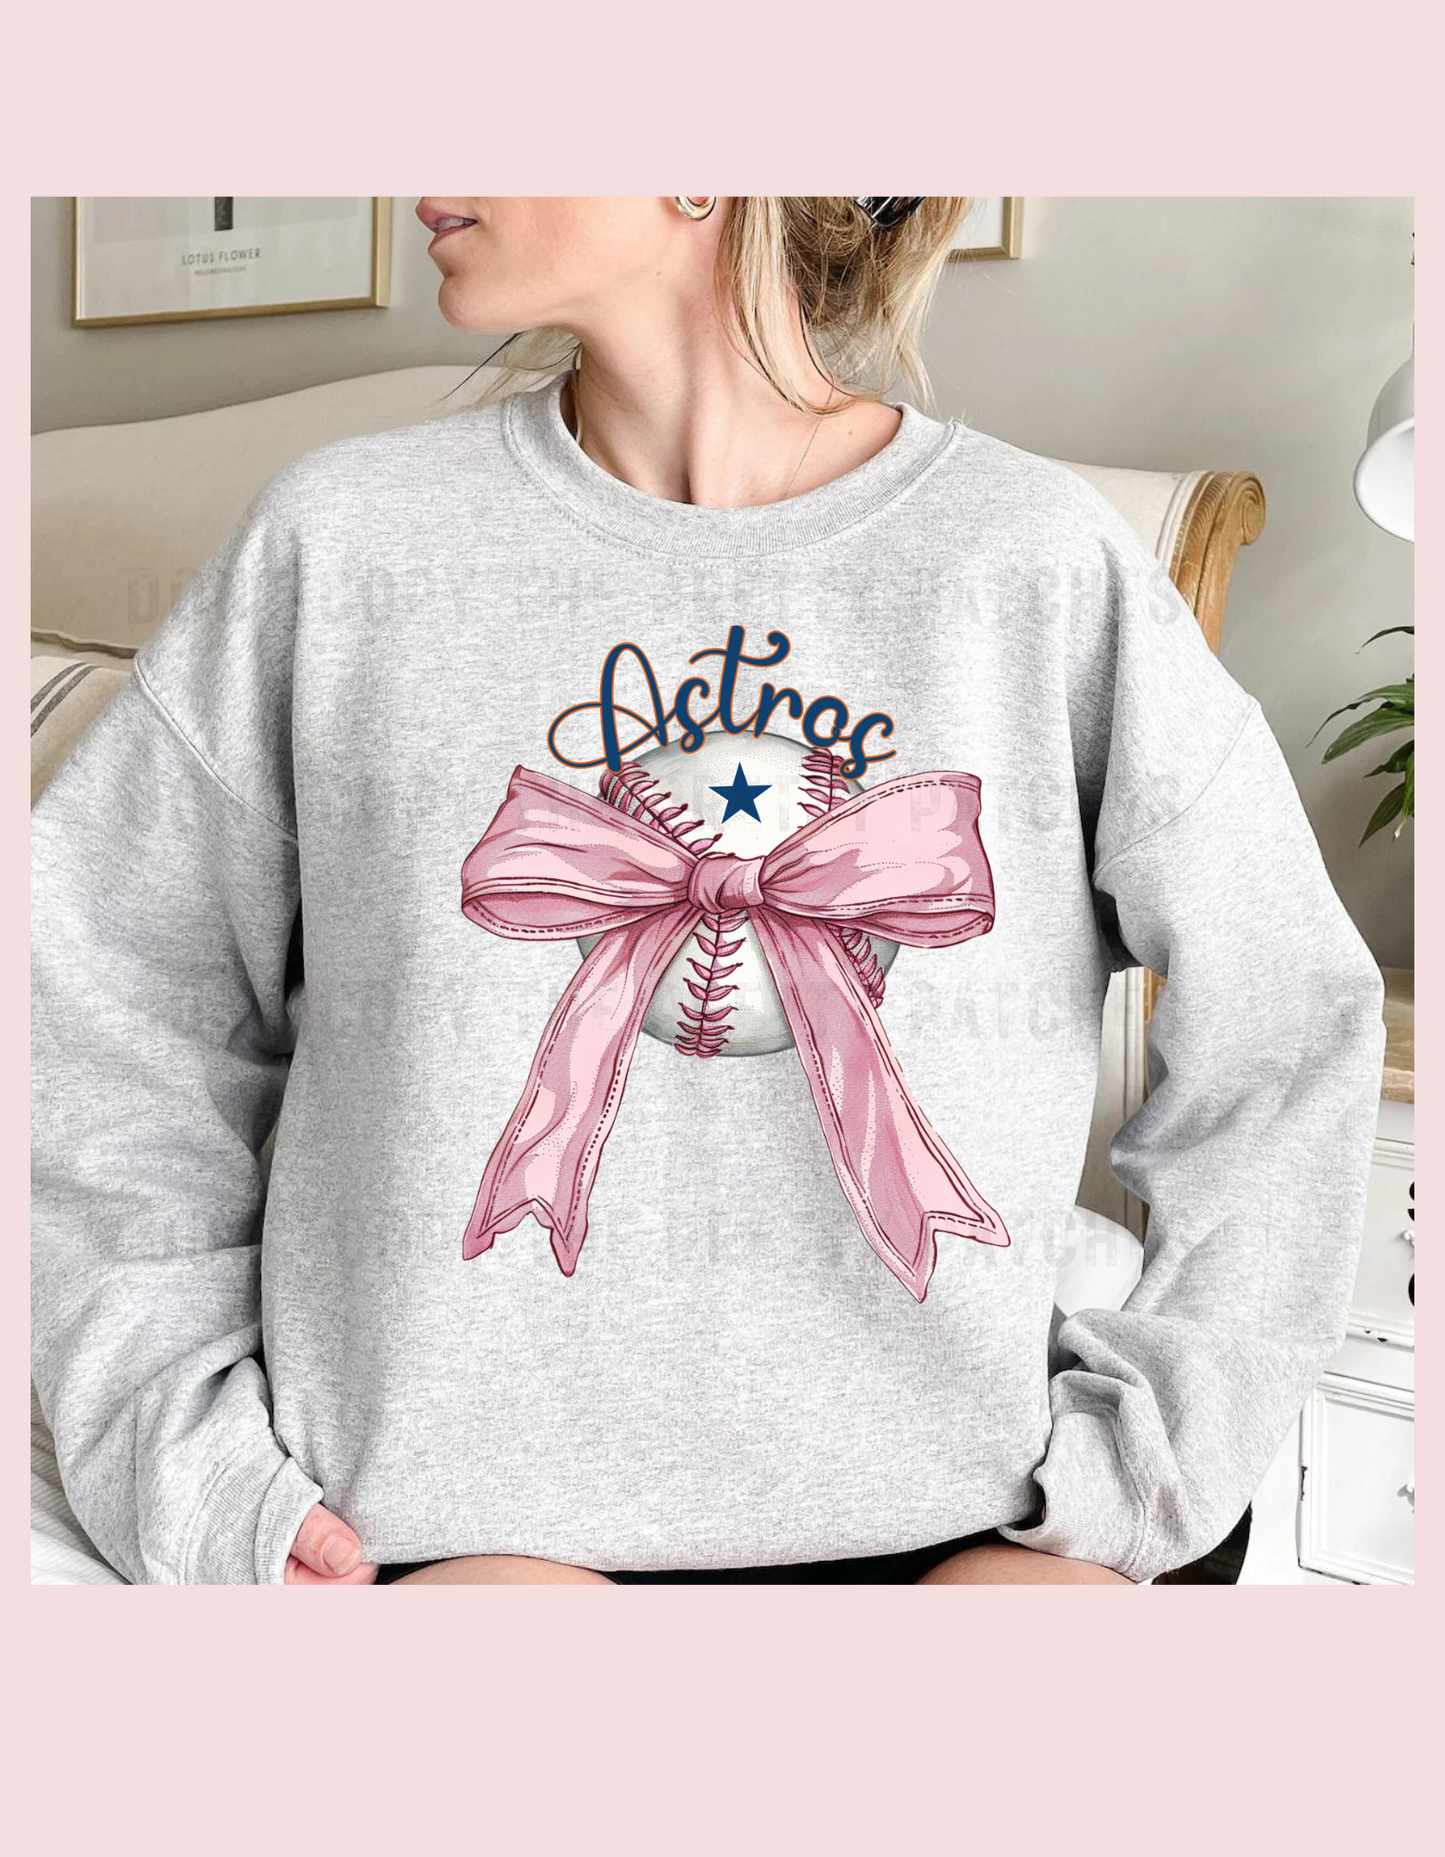 Girly astros sweatshirt YOUTH SIZES